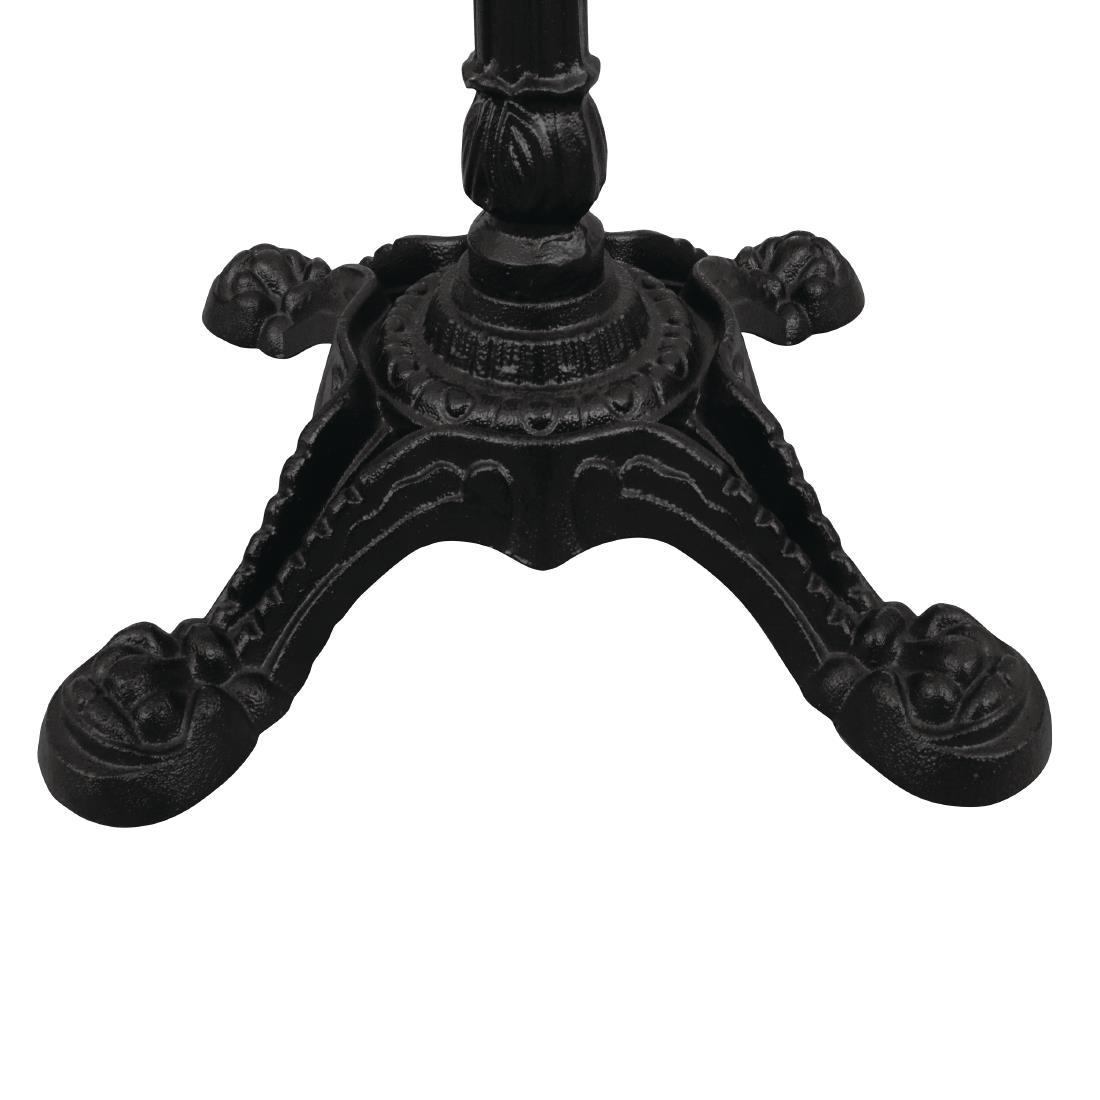 Bolero Cast Iron Ornate Table Leg Base - CE155  - 4